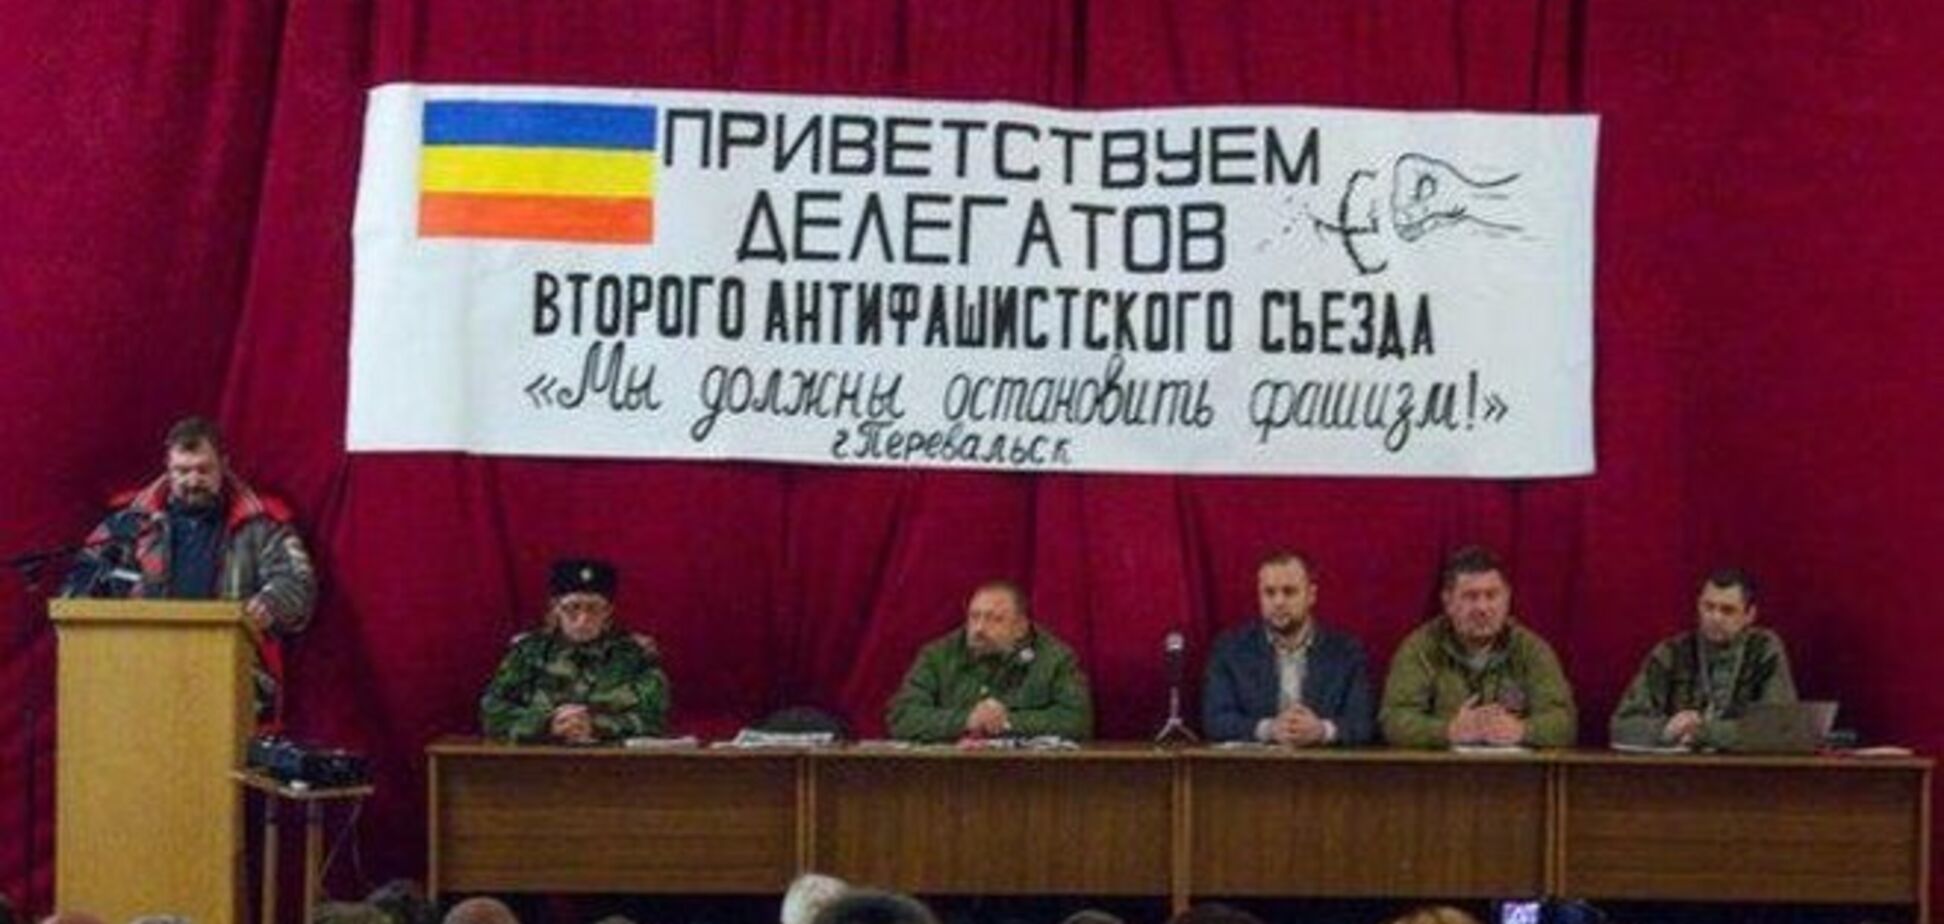 Террористы 'ЛНР' провели 'антифашистский' съезд под нацистским флагом: опубликованы фото